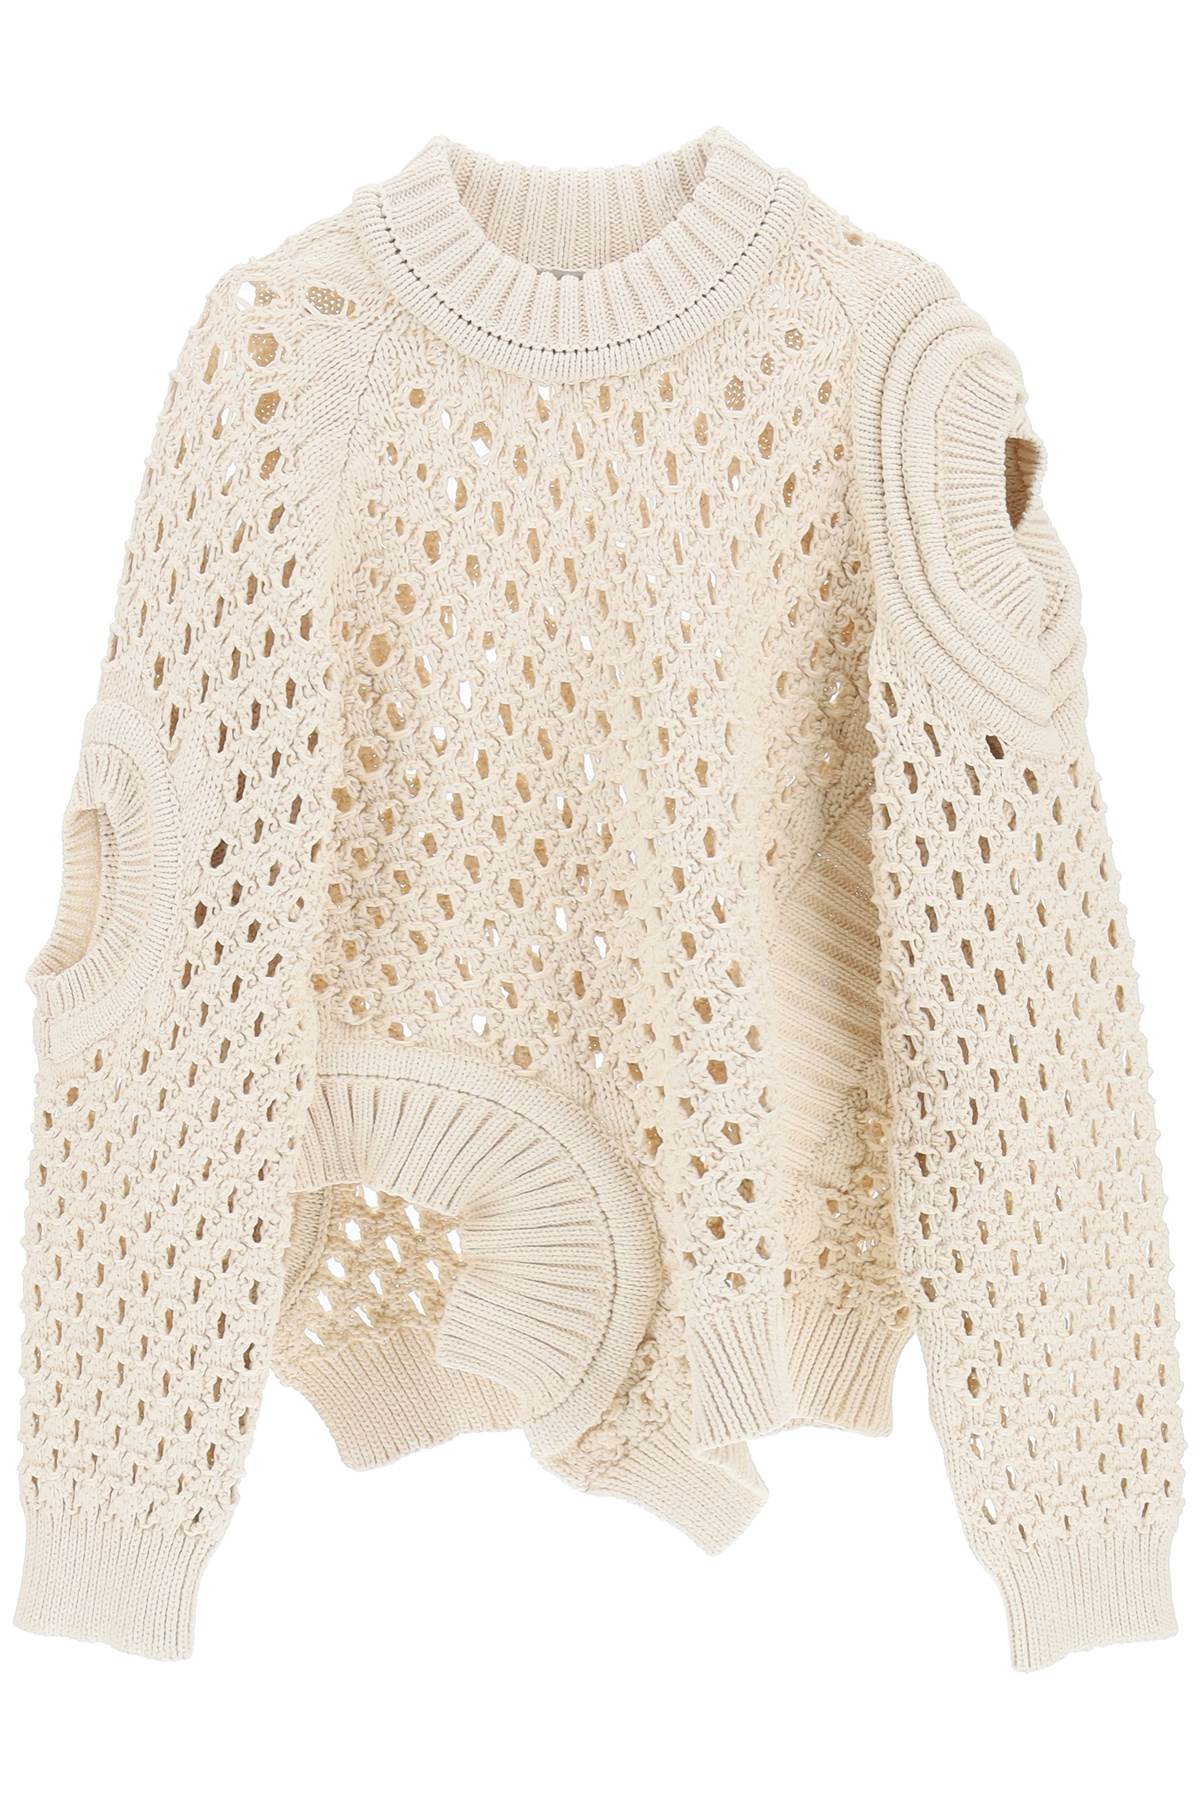 Stella McCartney Net Knit Sweater With Cut-out